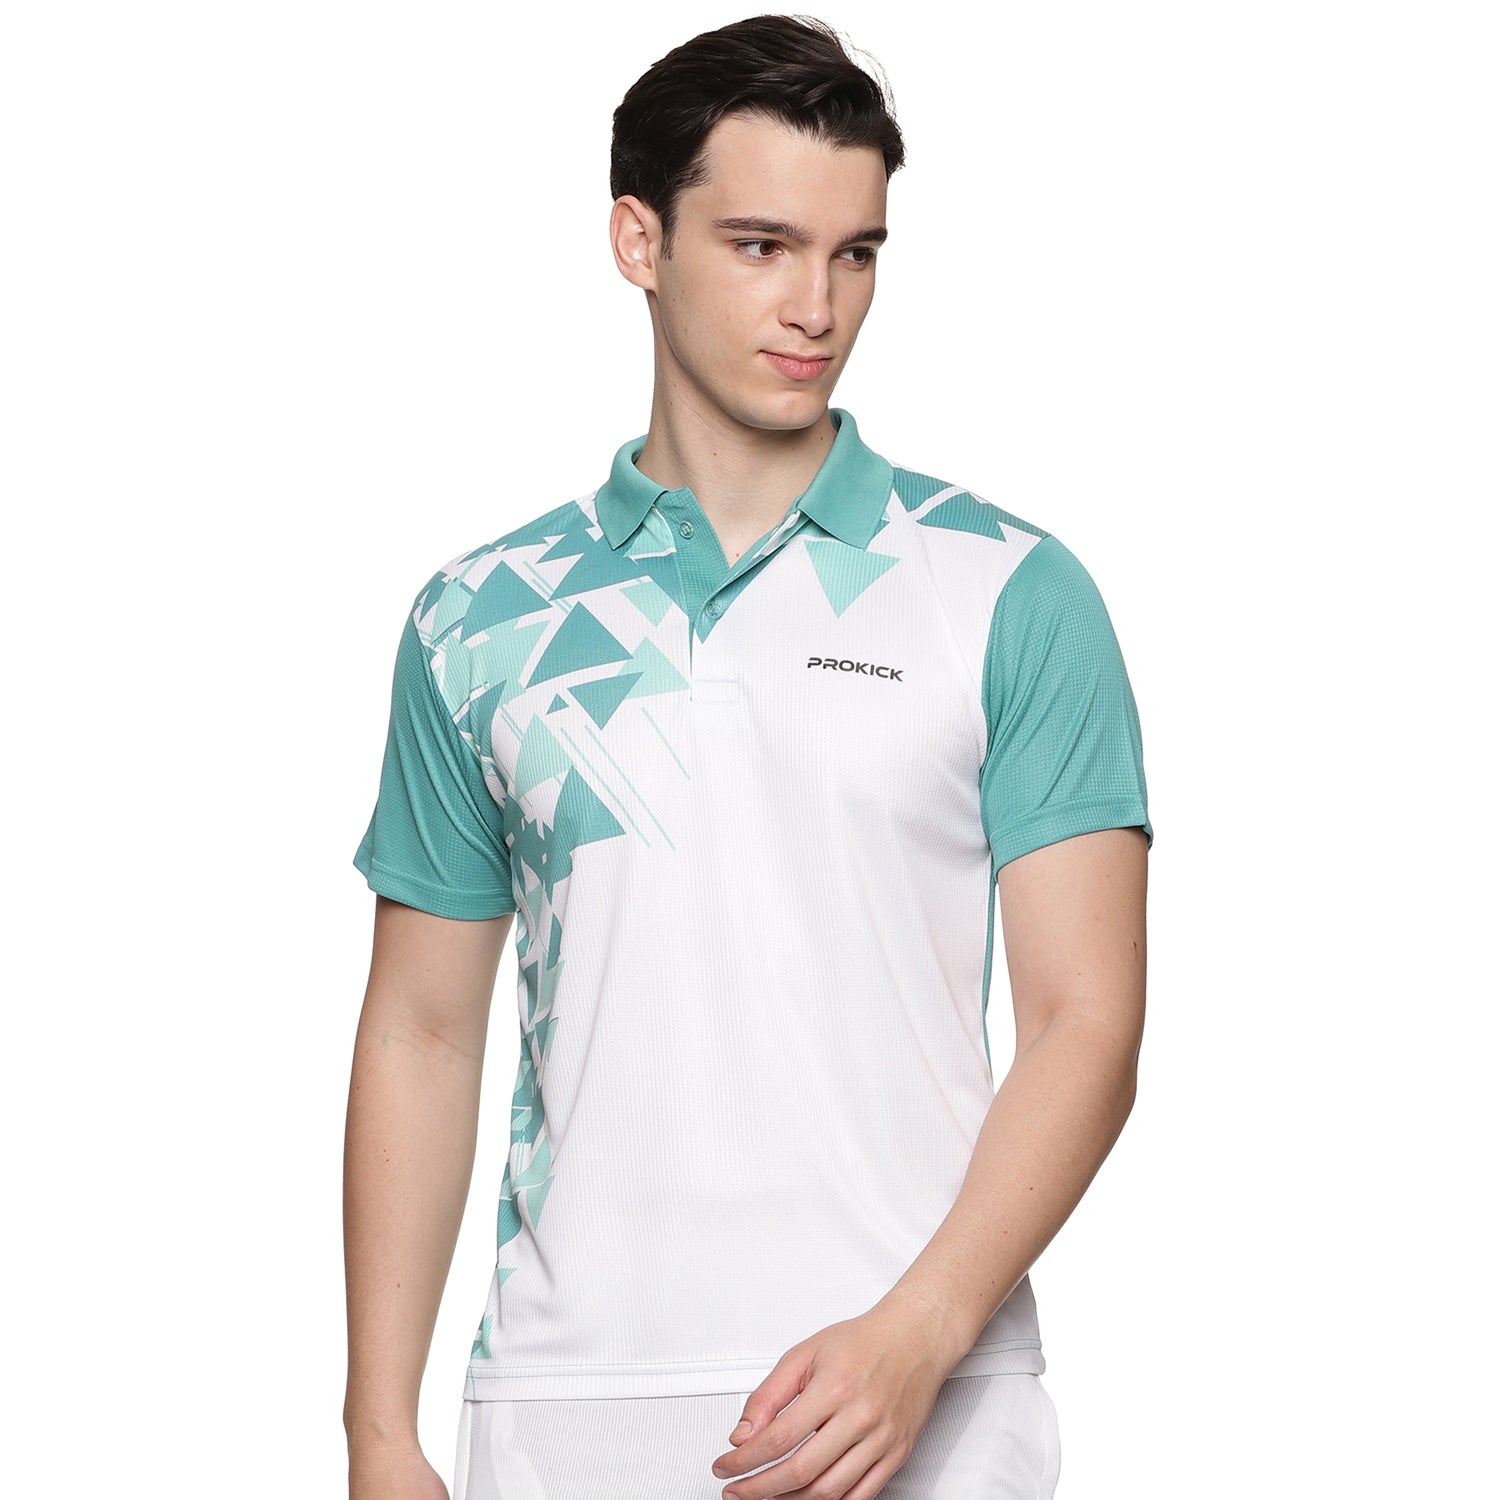 Prokick Sublimation Polo Neck Half Sleeves Badminton T-Shirt